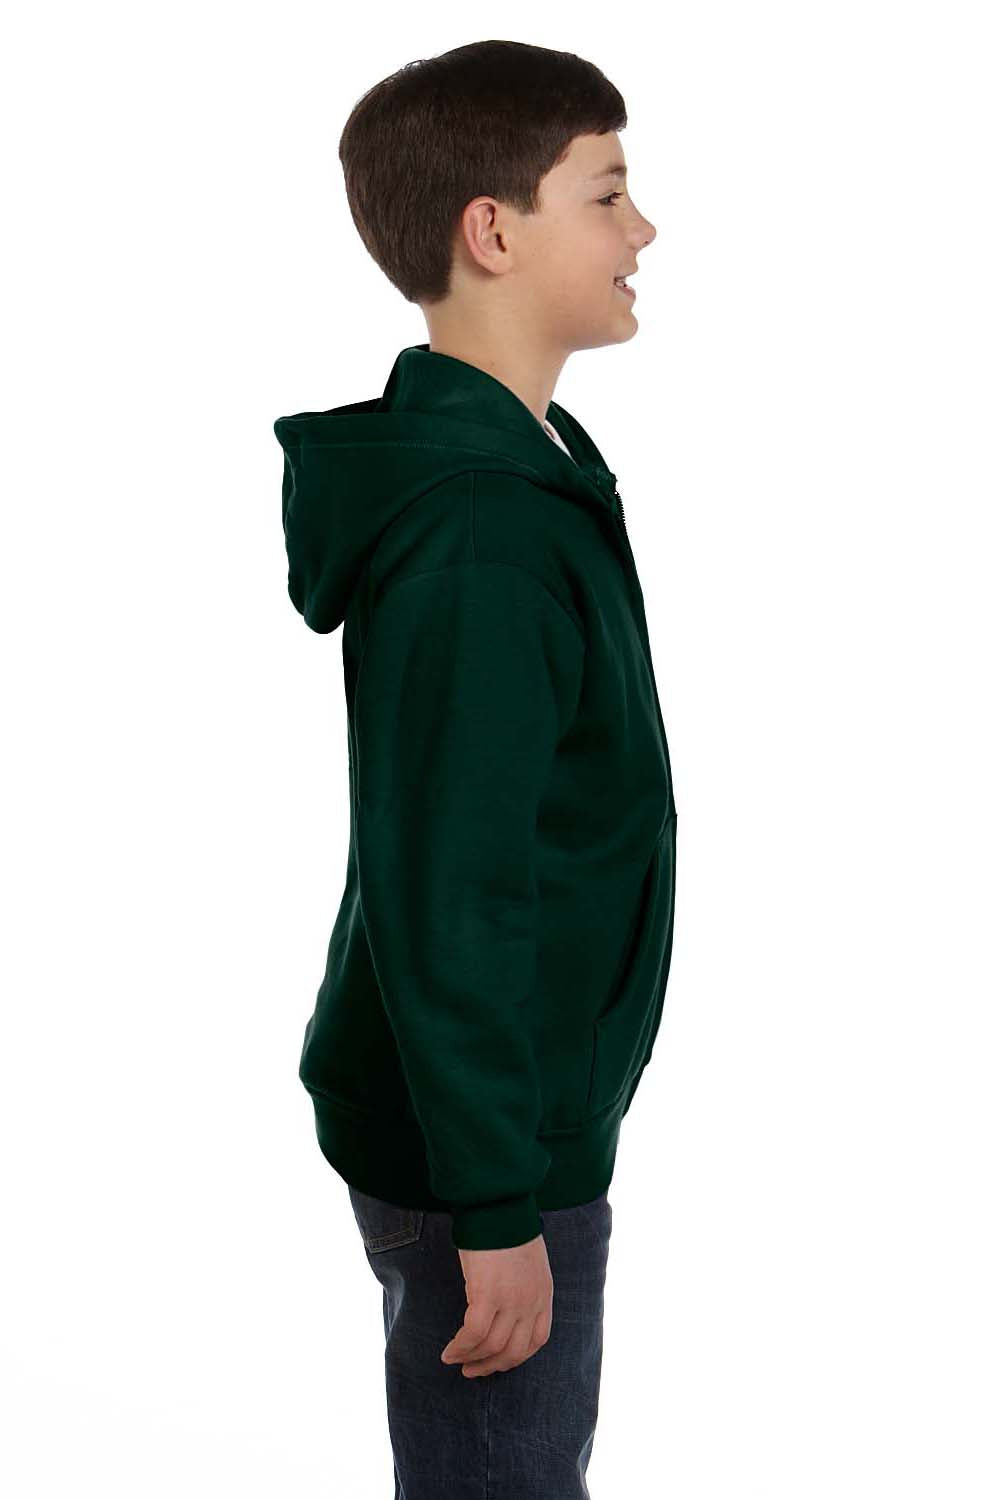 Hanes P480 Youth EcoSmart Print Pro XP Full Zip Hooded Sweatshirt Hoodie Forest Green Side